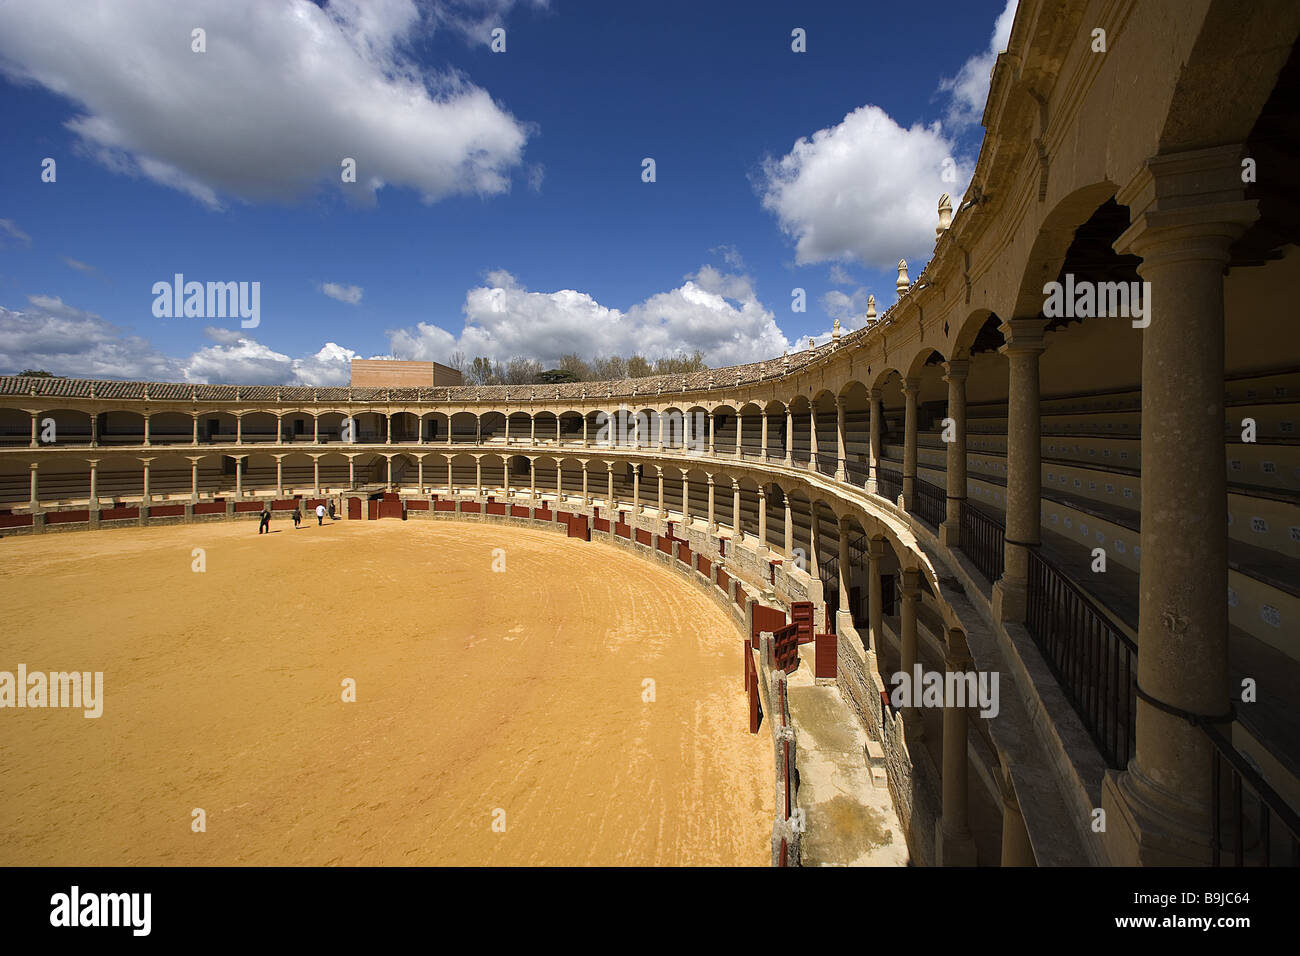 spain Andalusia Ronda bullring visitors series Costa Del Sol destination sight culture tradition bullfight arena buildings Stock Photo